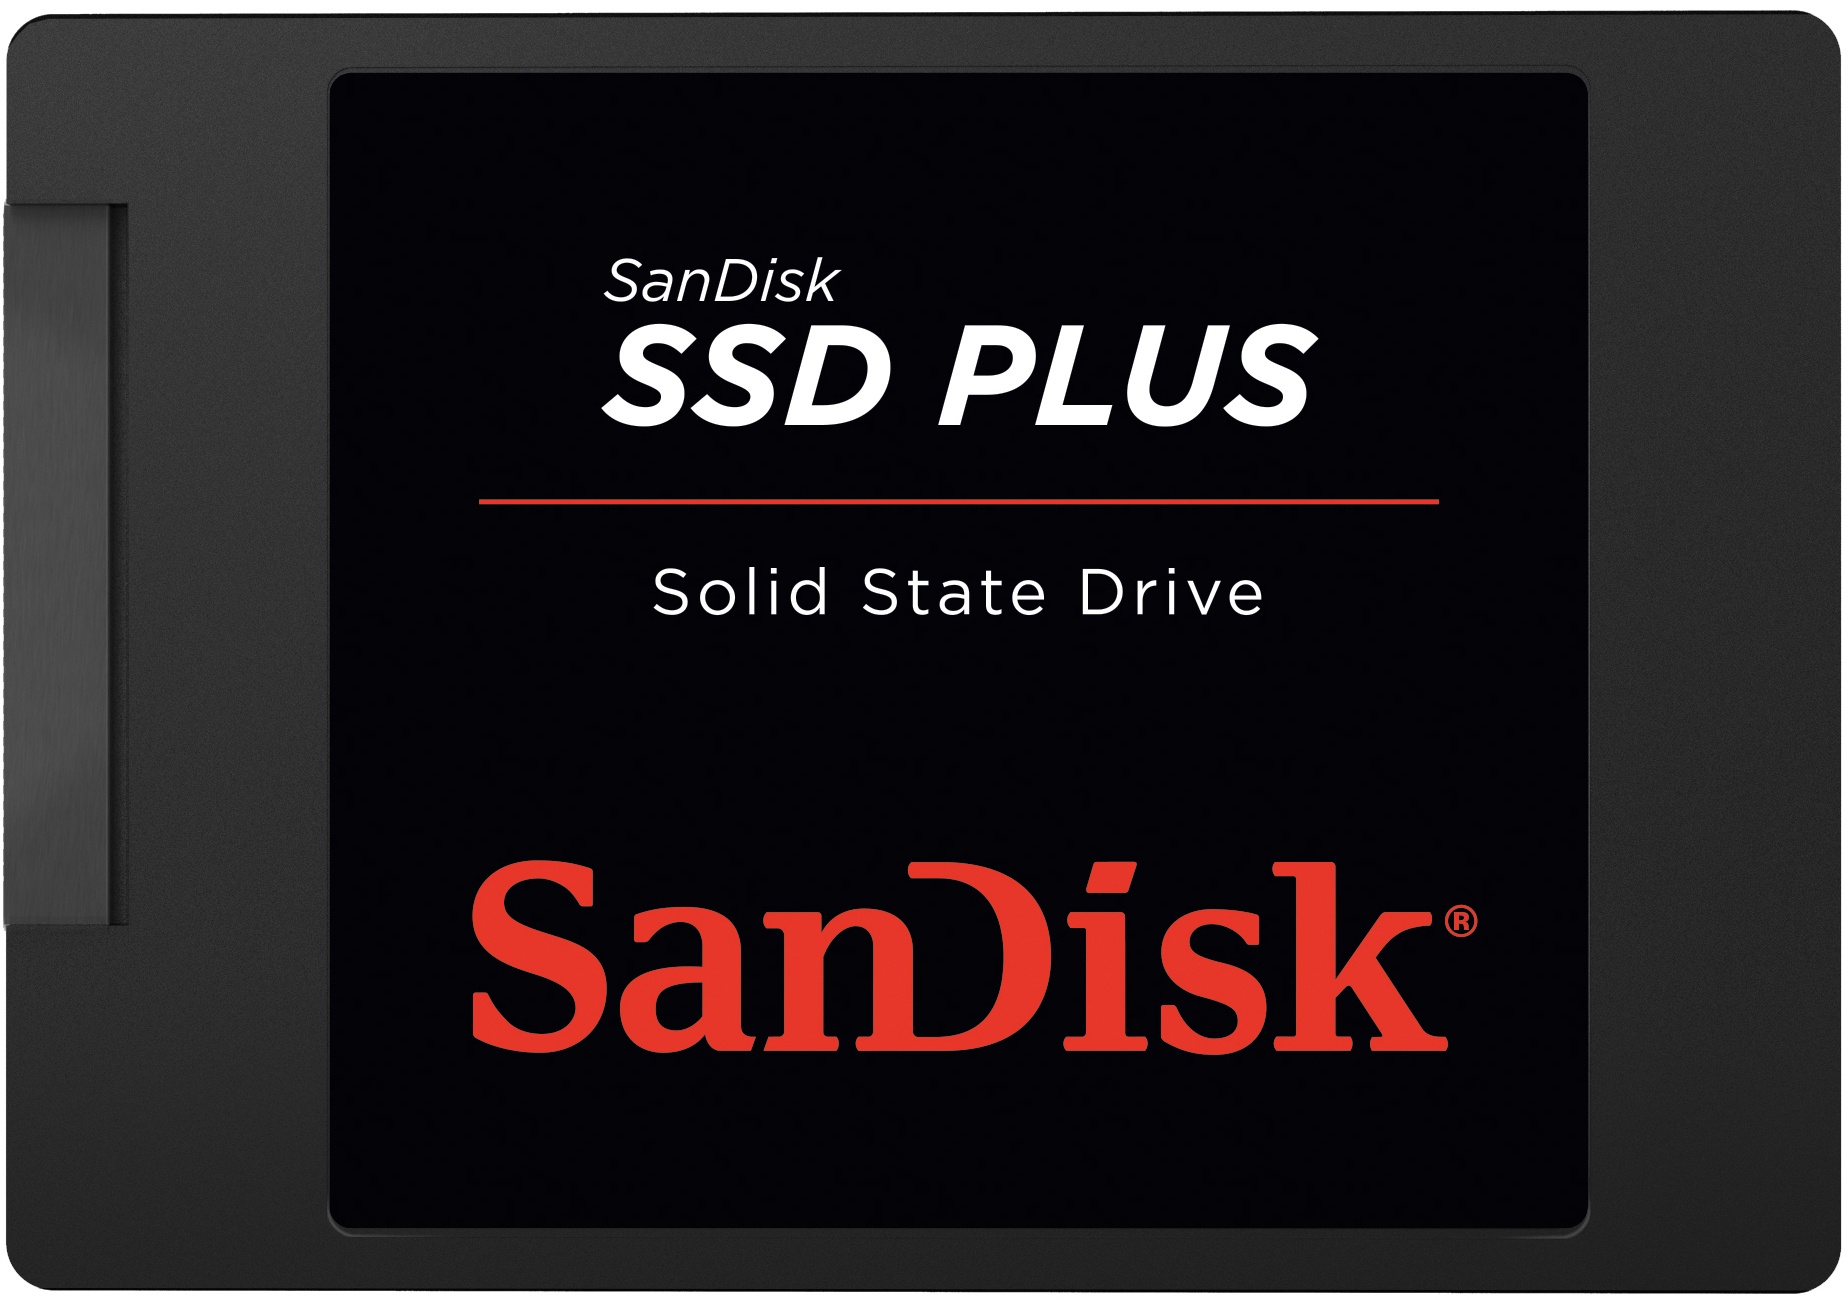 SanDisk Plus SSD 240GB 2.5 Zoll SATA 6Gb/s - interne Solid-State-Drive